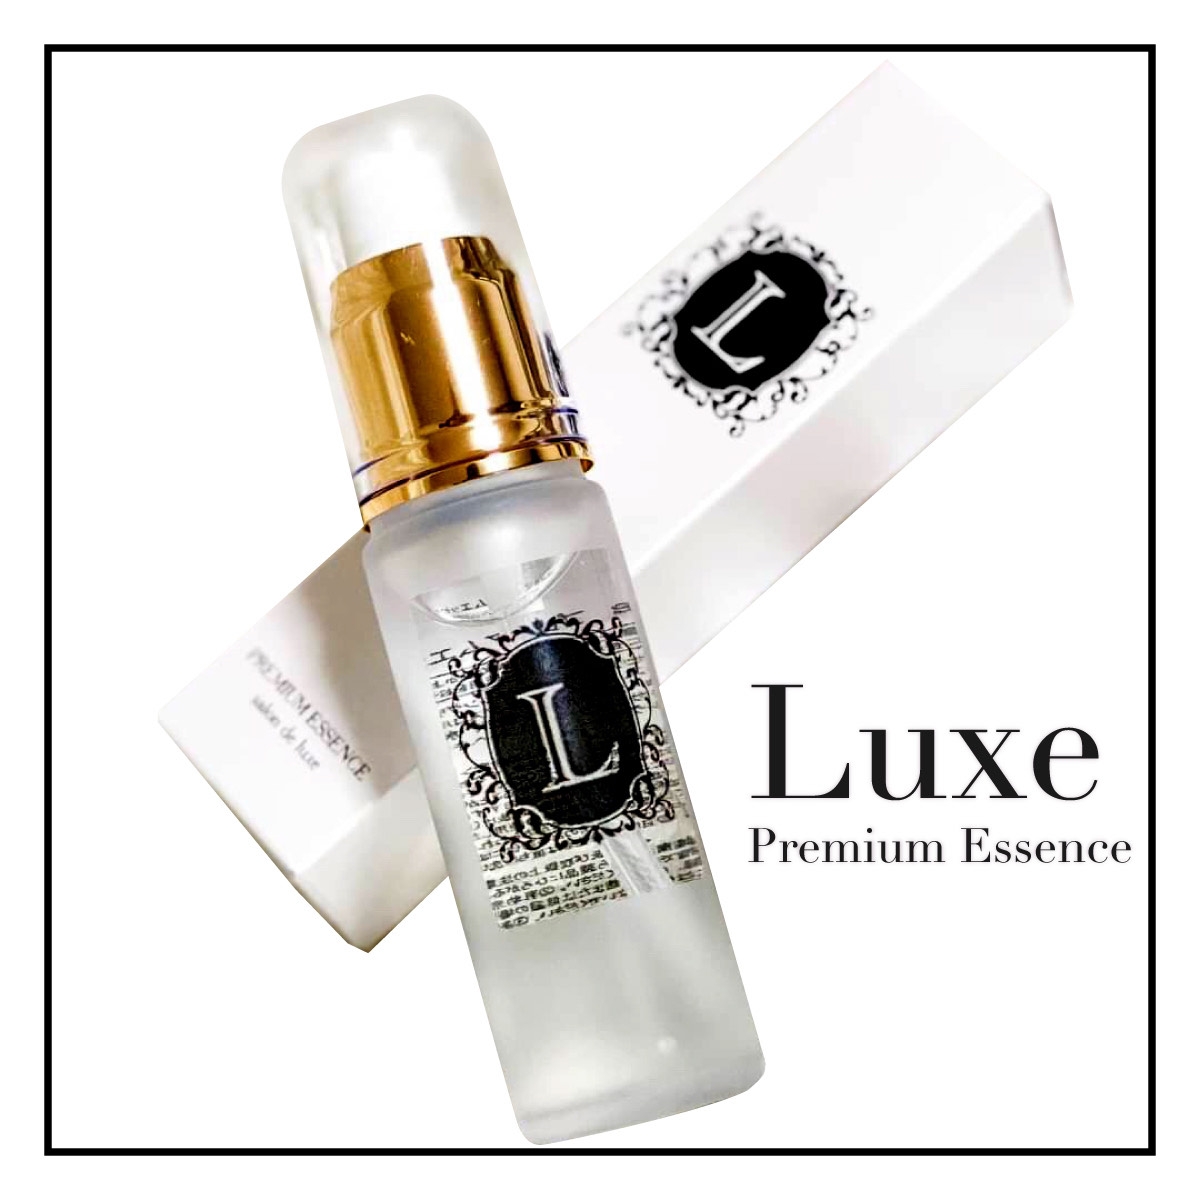 Luxe Premium Essence